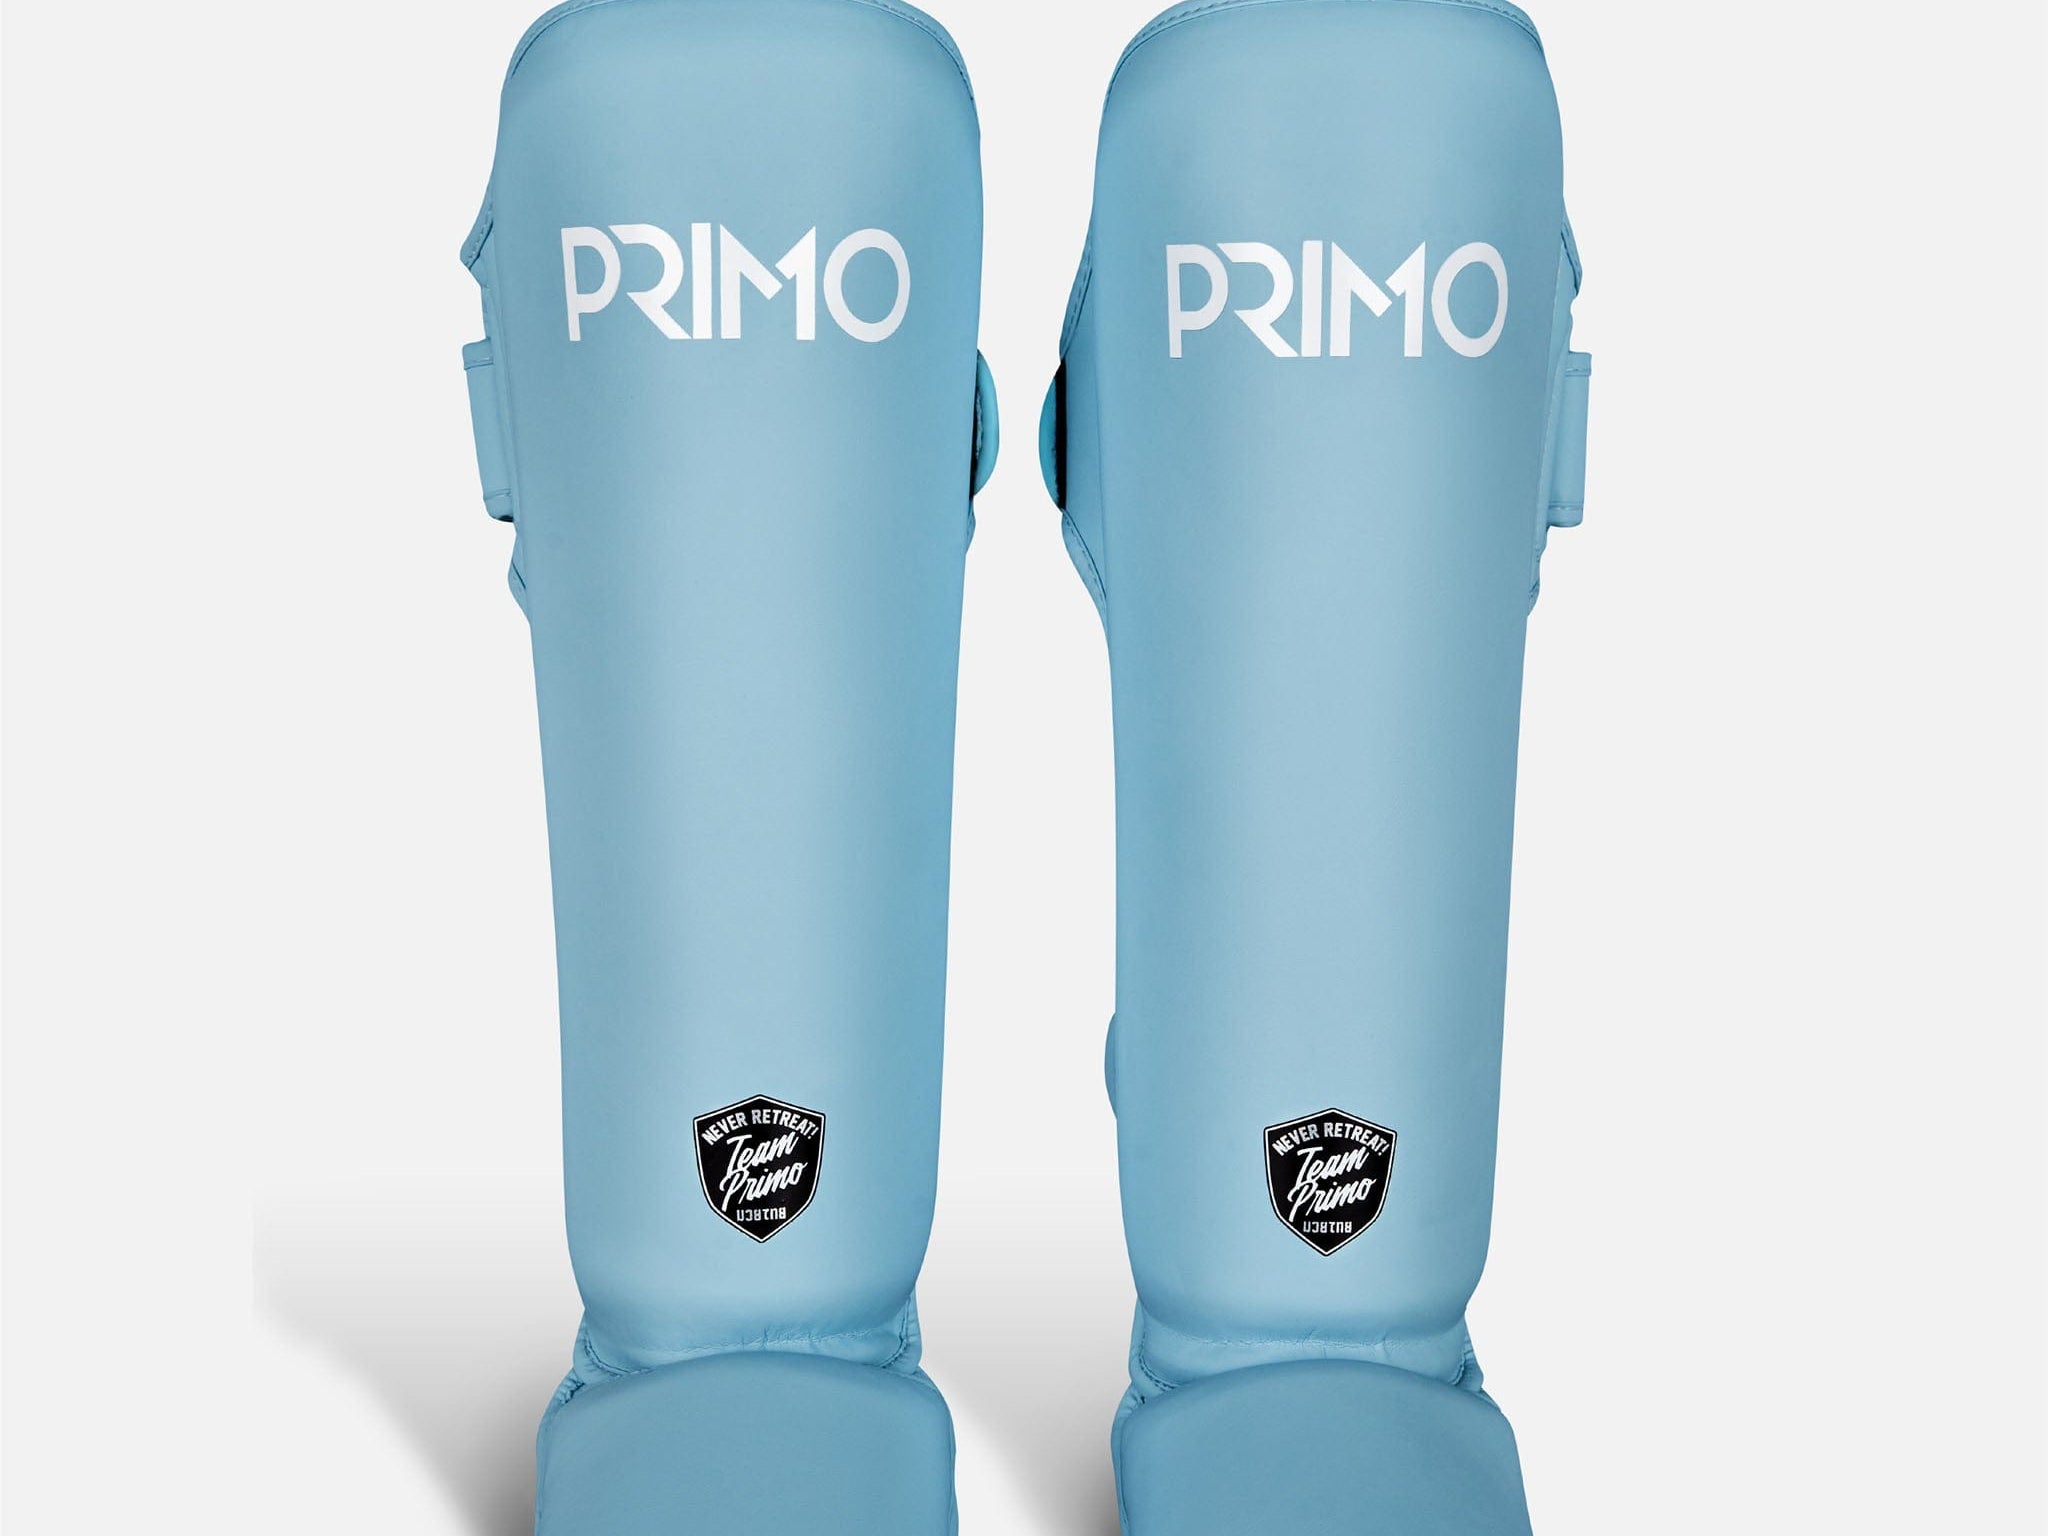 Primo Fight Wear Official Classic Muay Thai Shinguard - Arctic Blue